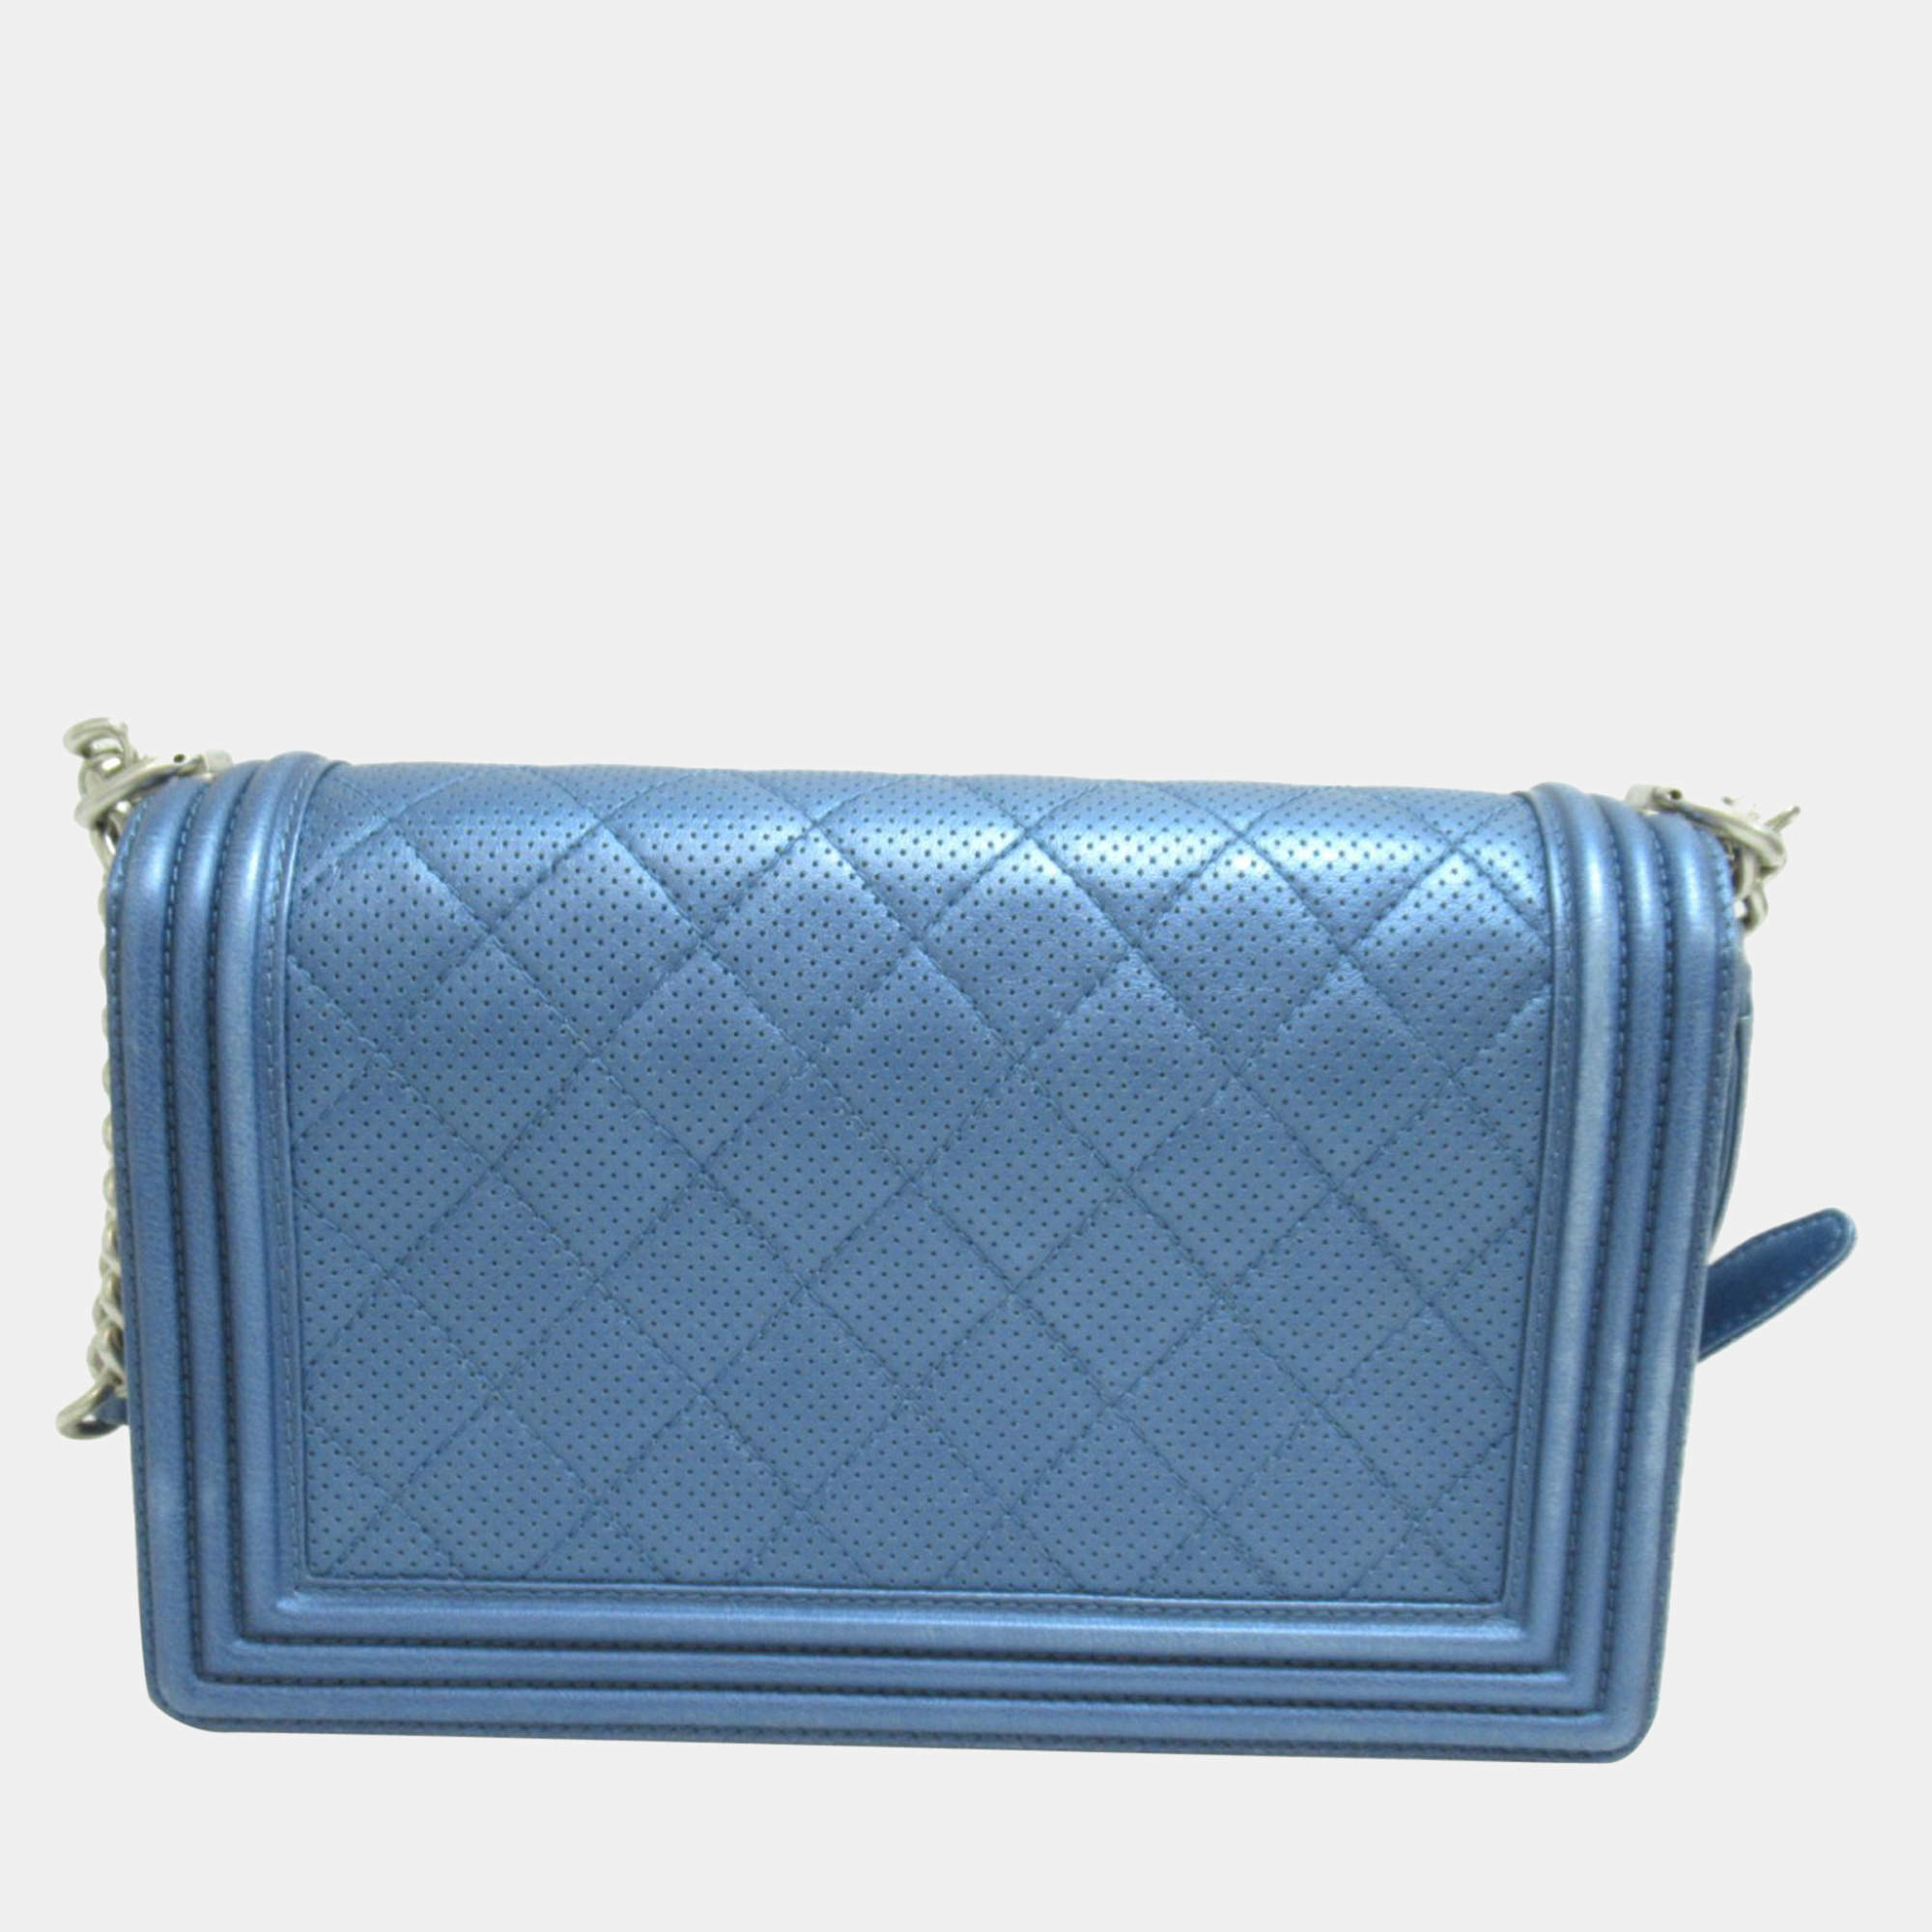 Chanel Blue Leather Medium Perforated Boy Flap Shoulder Bag Chanel  TLC